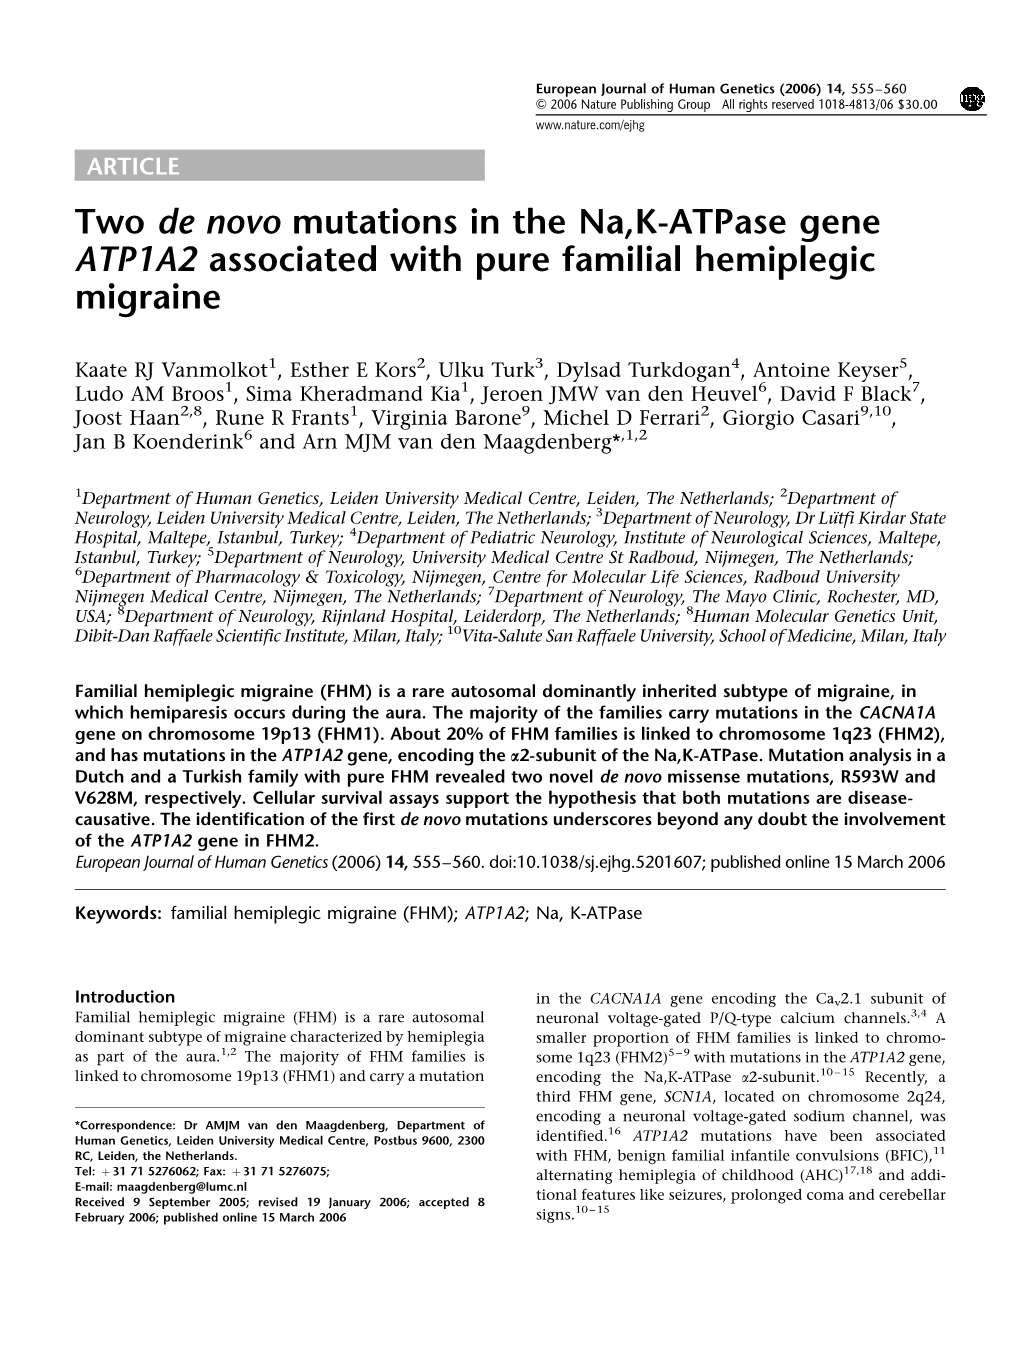 Two De Novo Mutations in the Na,K-Atpase Gene ATP1A2 Associated with Pure Familial Hemiplegic Migraine